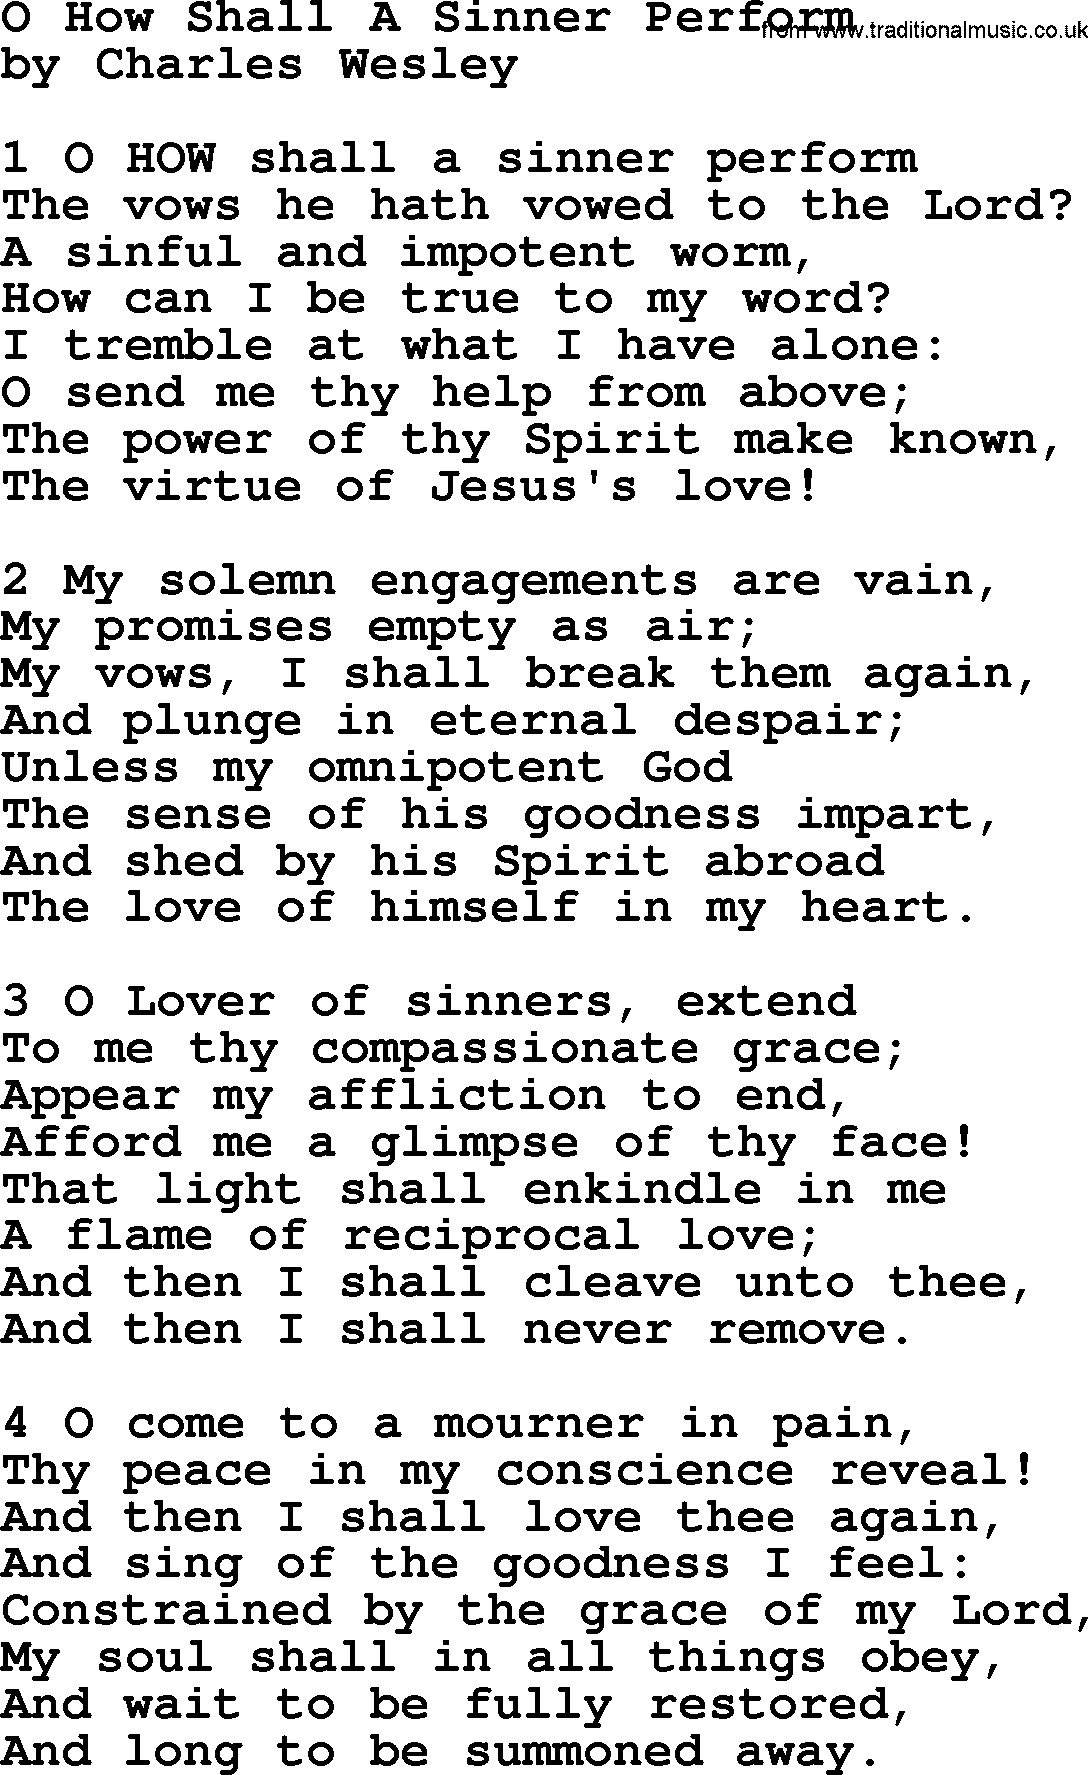 Charles Wesley hymn: O How Shall A Sinner Perform, lyrics